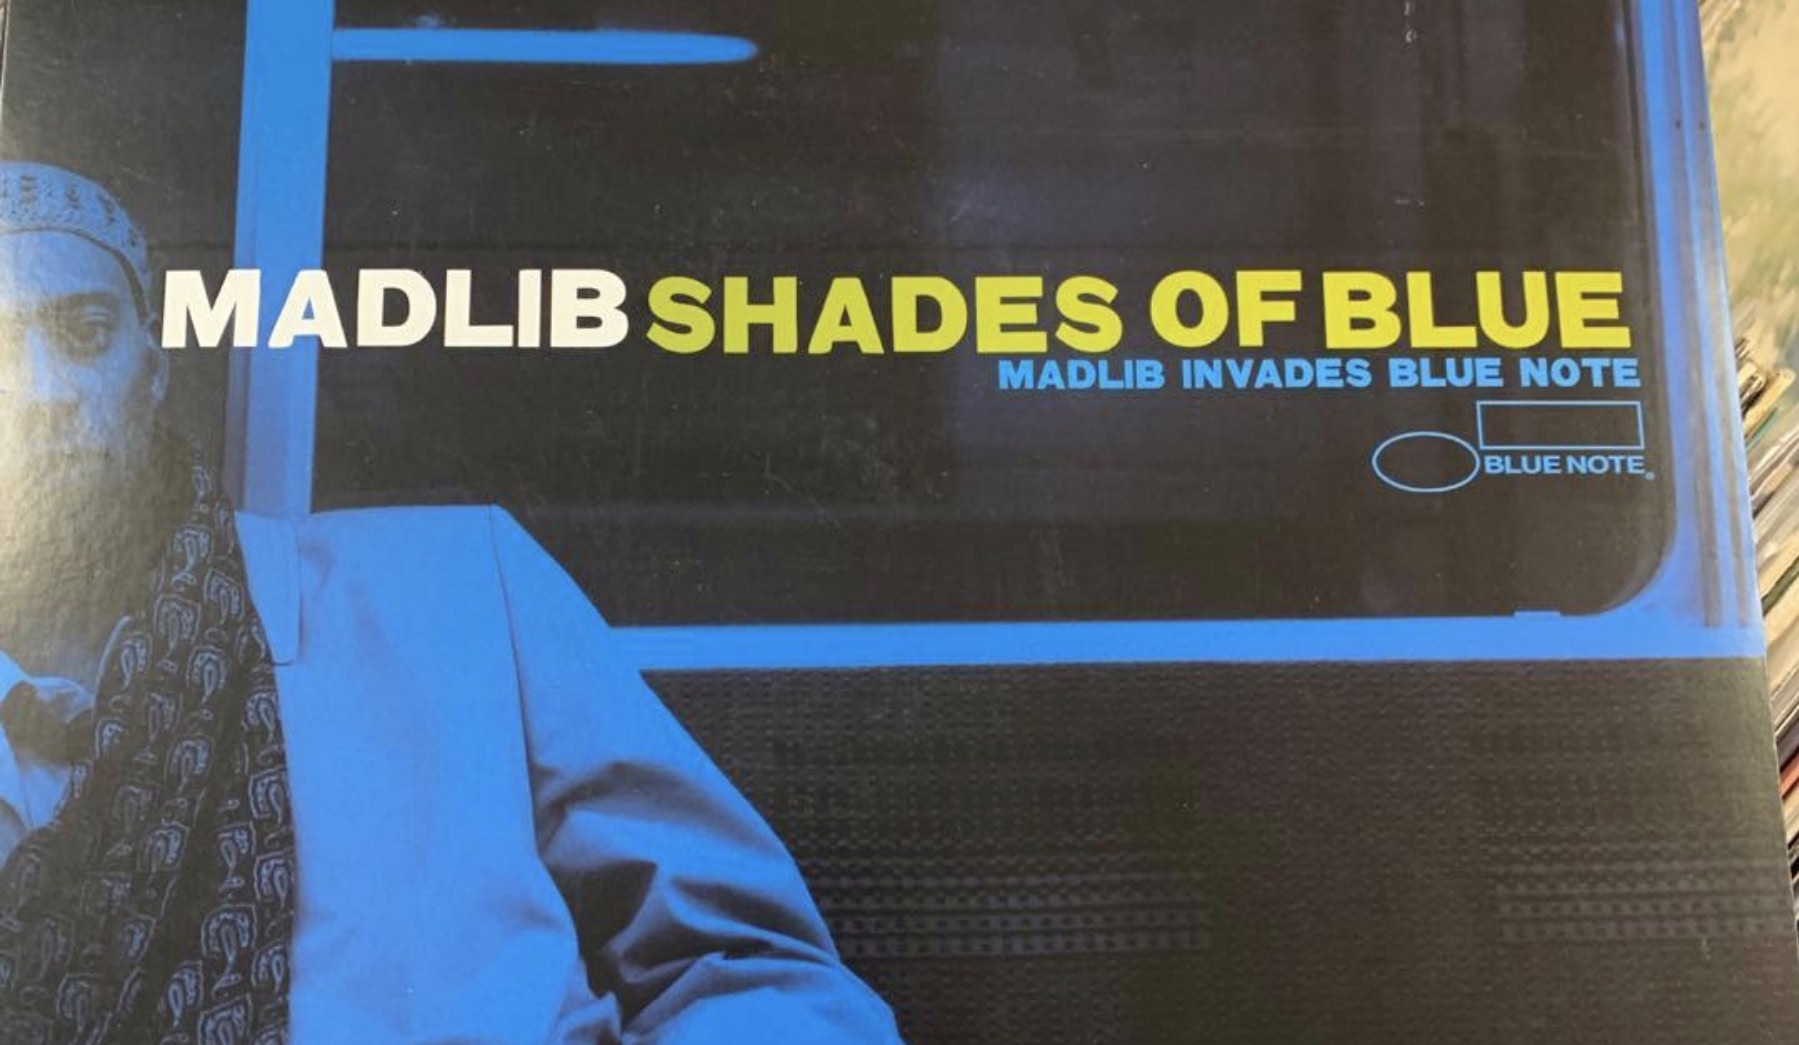 Madlib used hip hop record